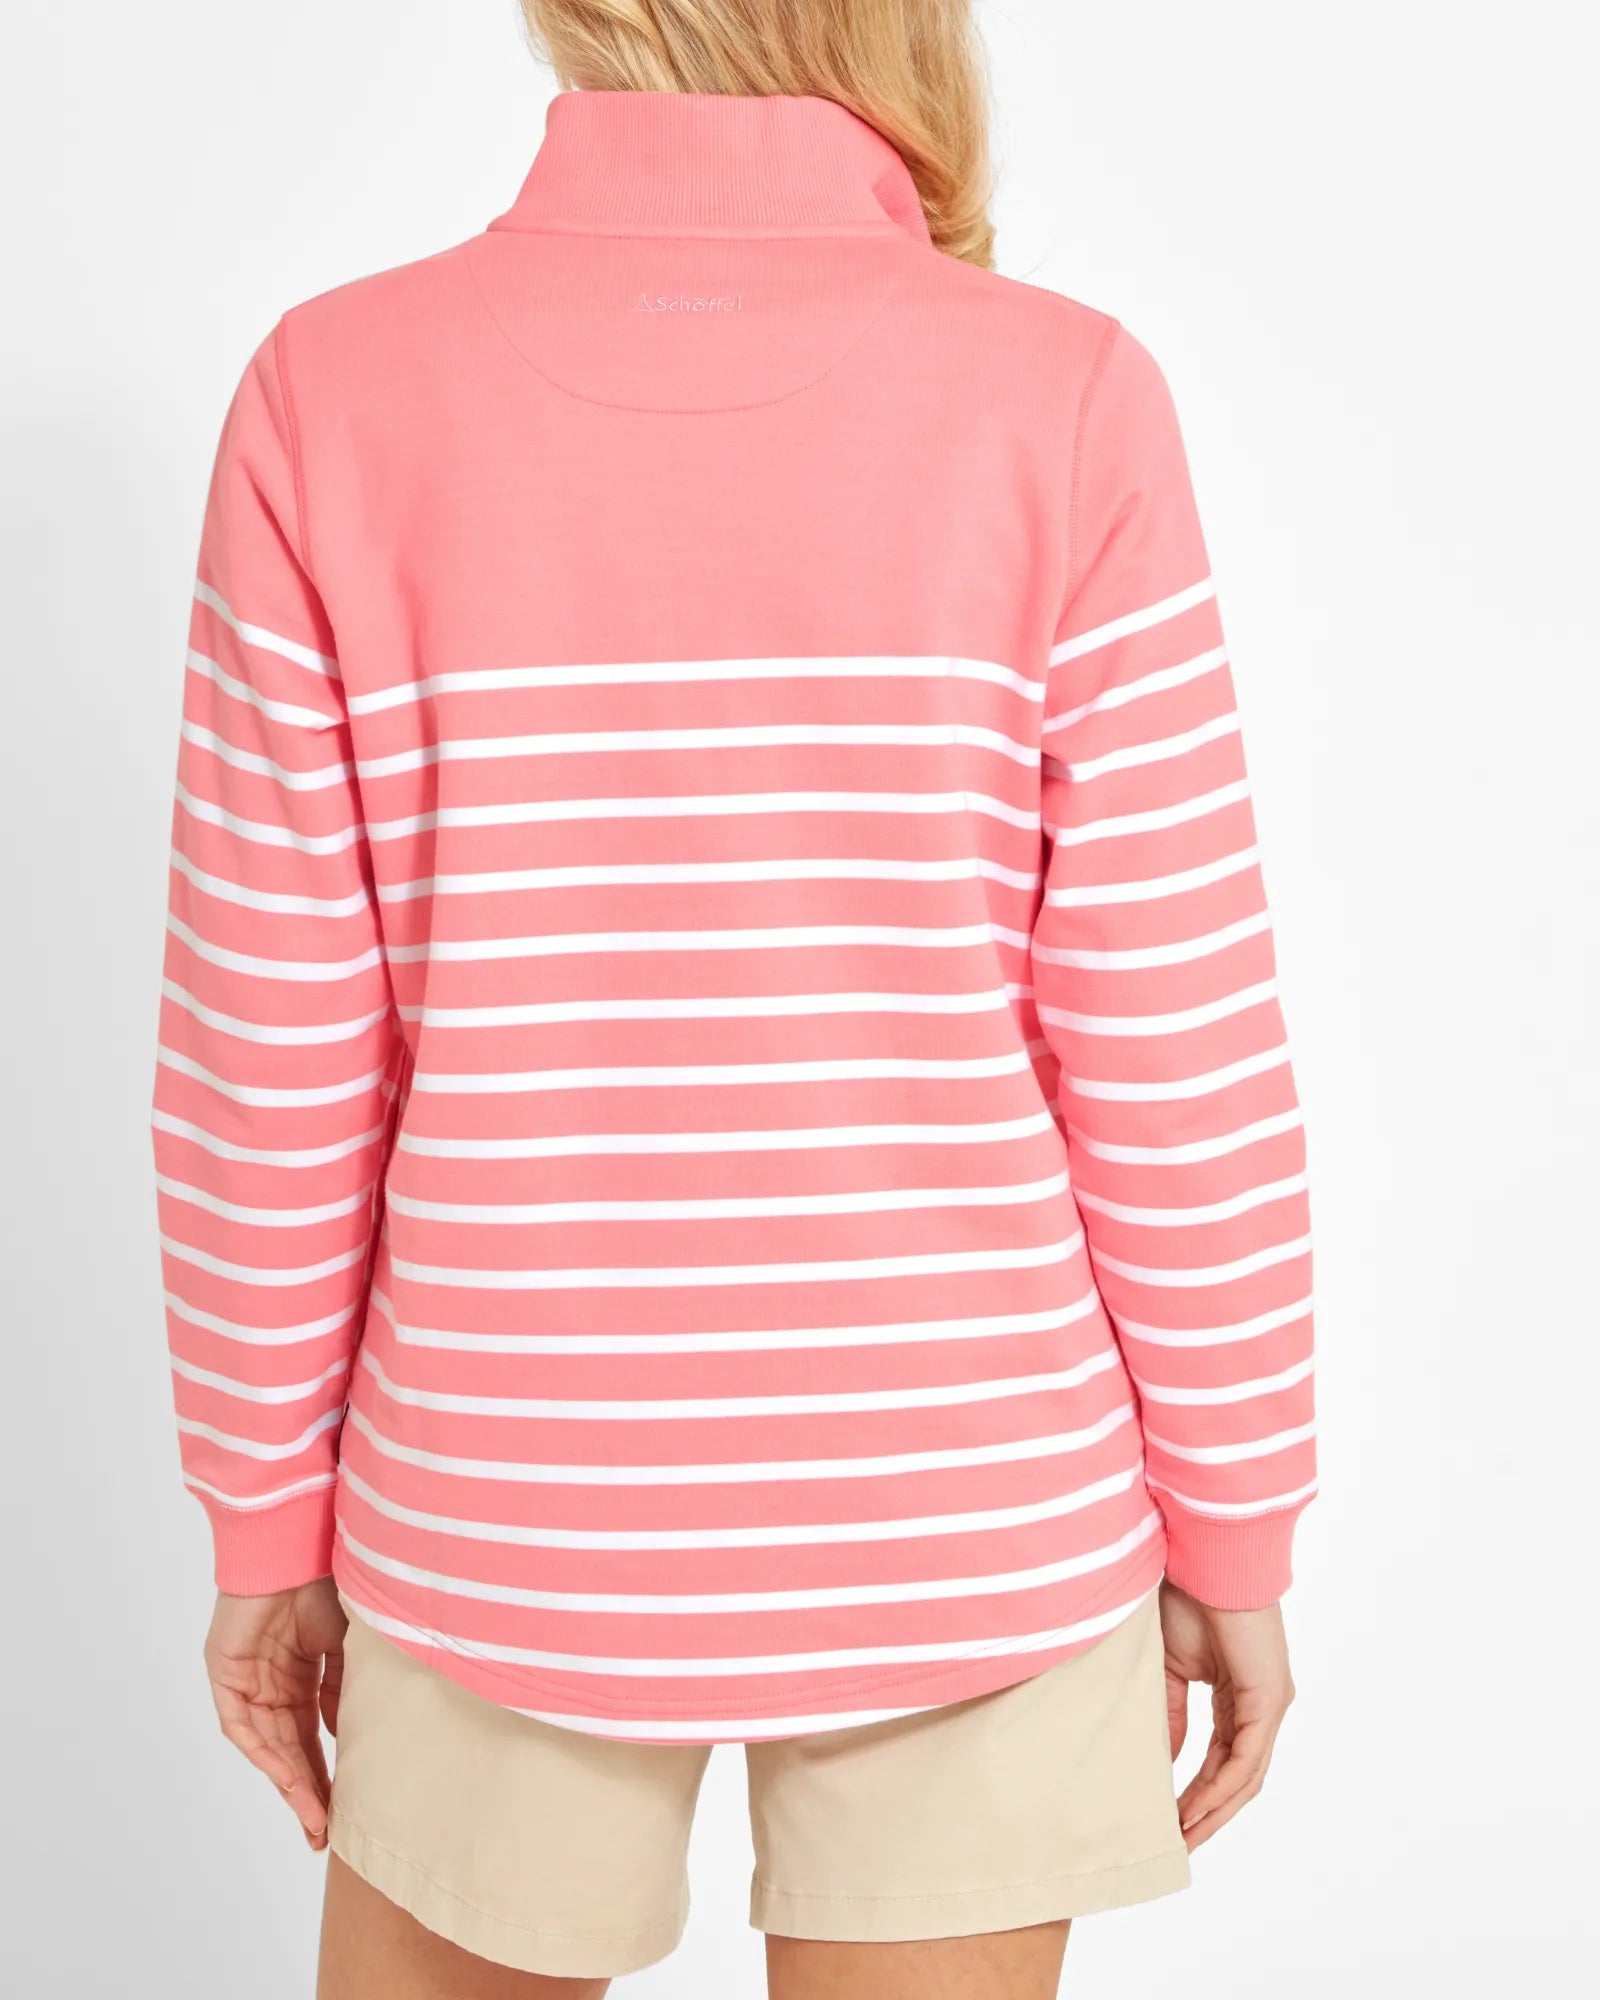 Hope Cove Flamingo Sweatshirt